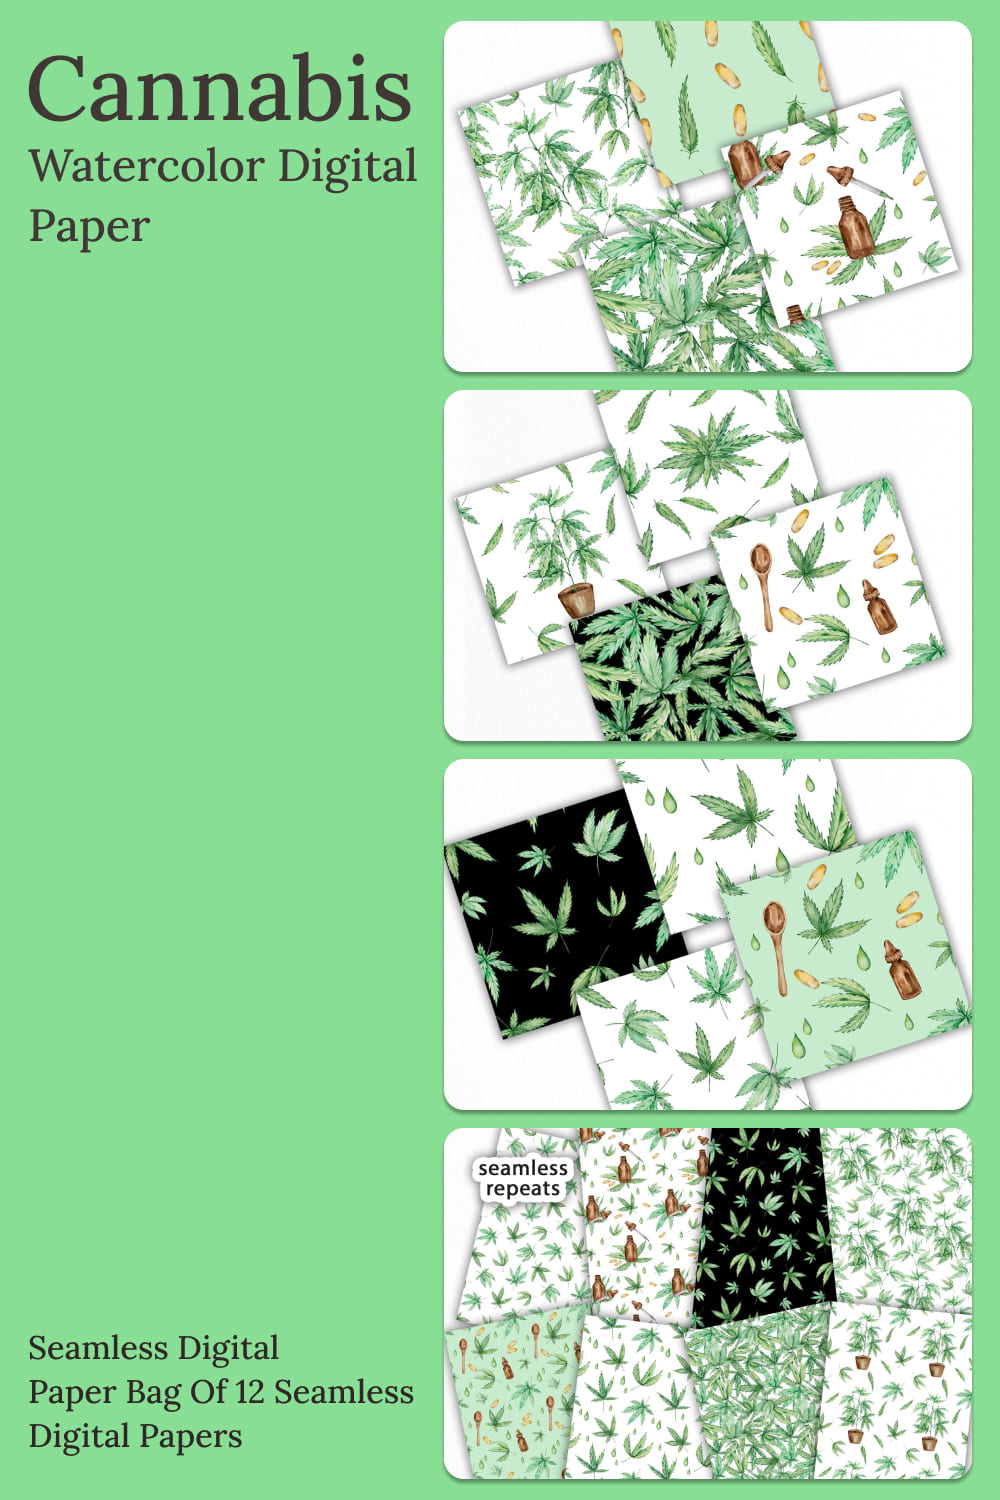 Cannabis watercolor digital paper - pinterest image preview.